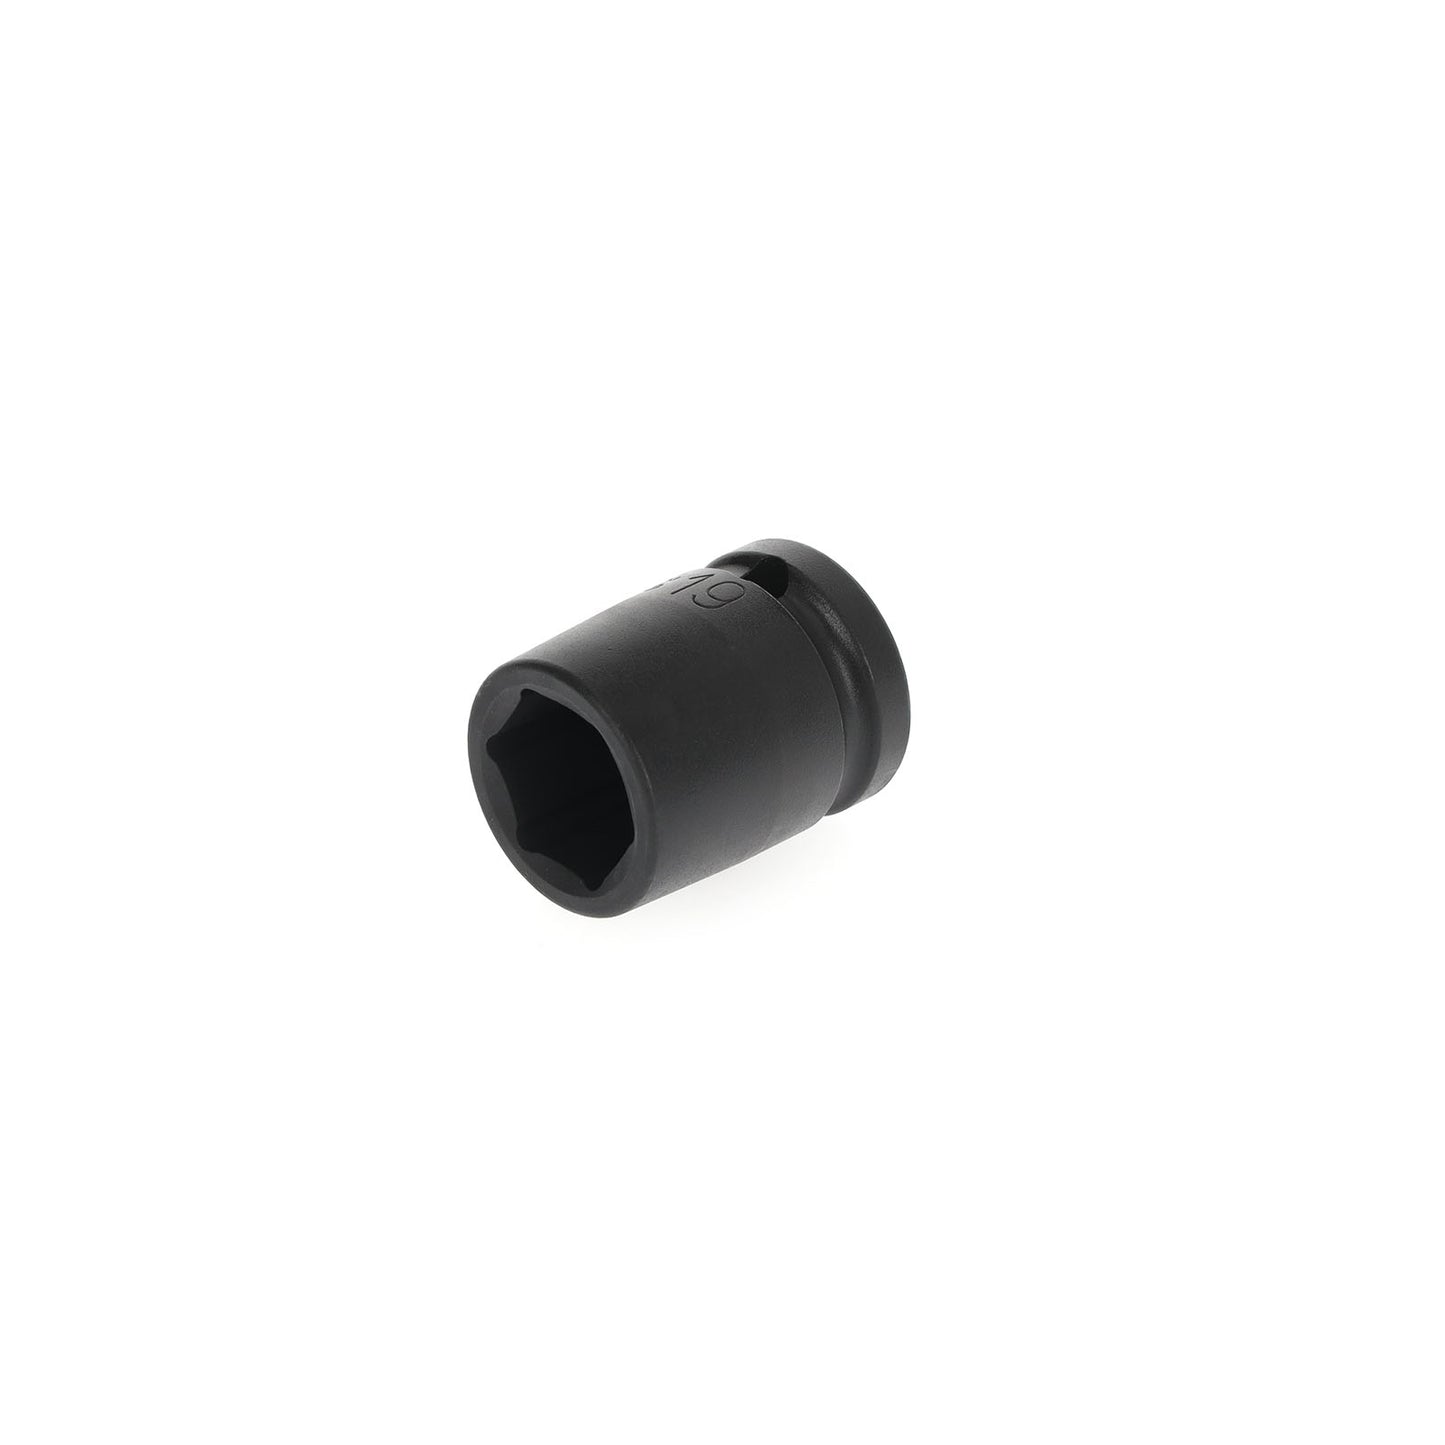 GEDORE K 19 19 - Hexagonal Impact Socket 1/2", 19 mm (6161090)